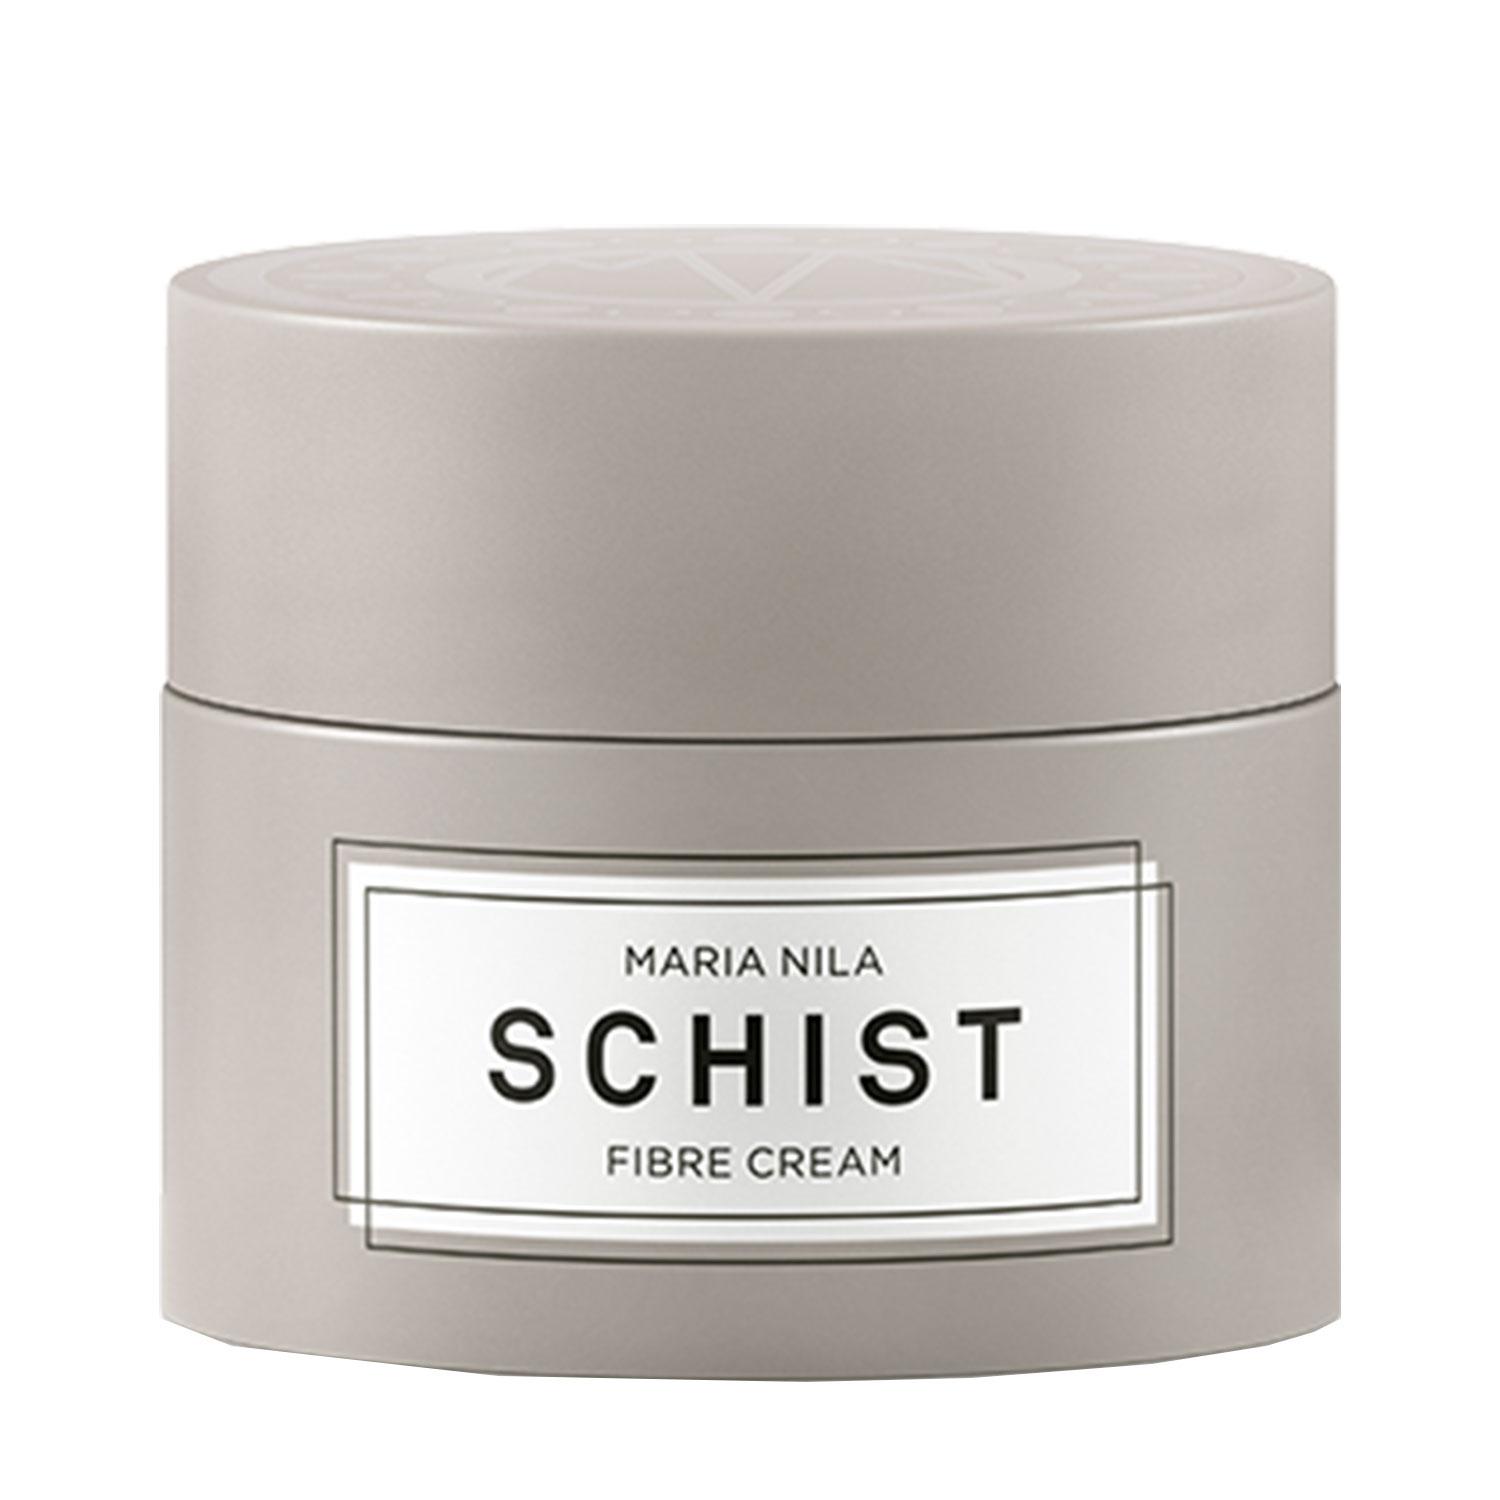 Minerals - Schist Fibre Cream